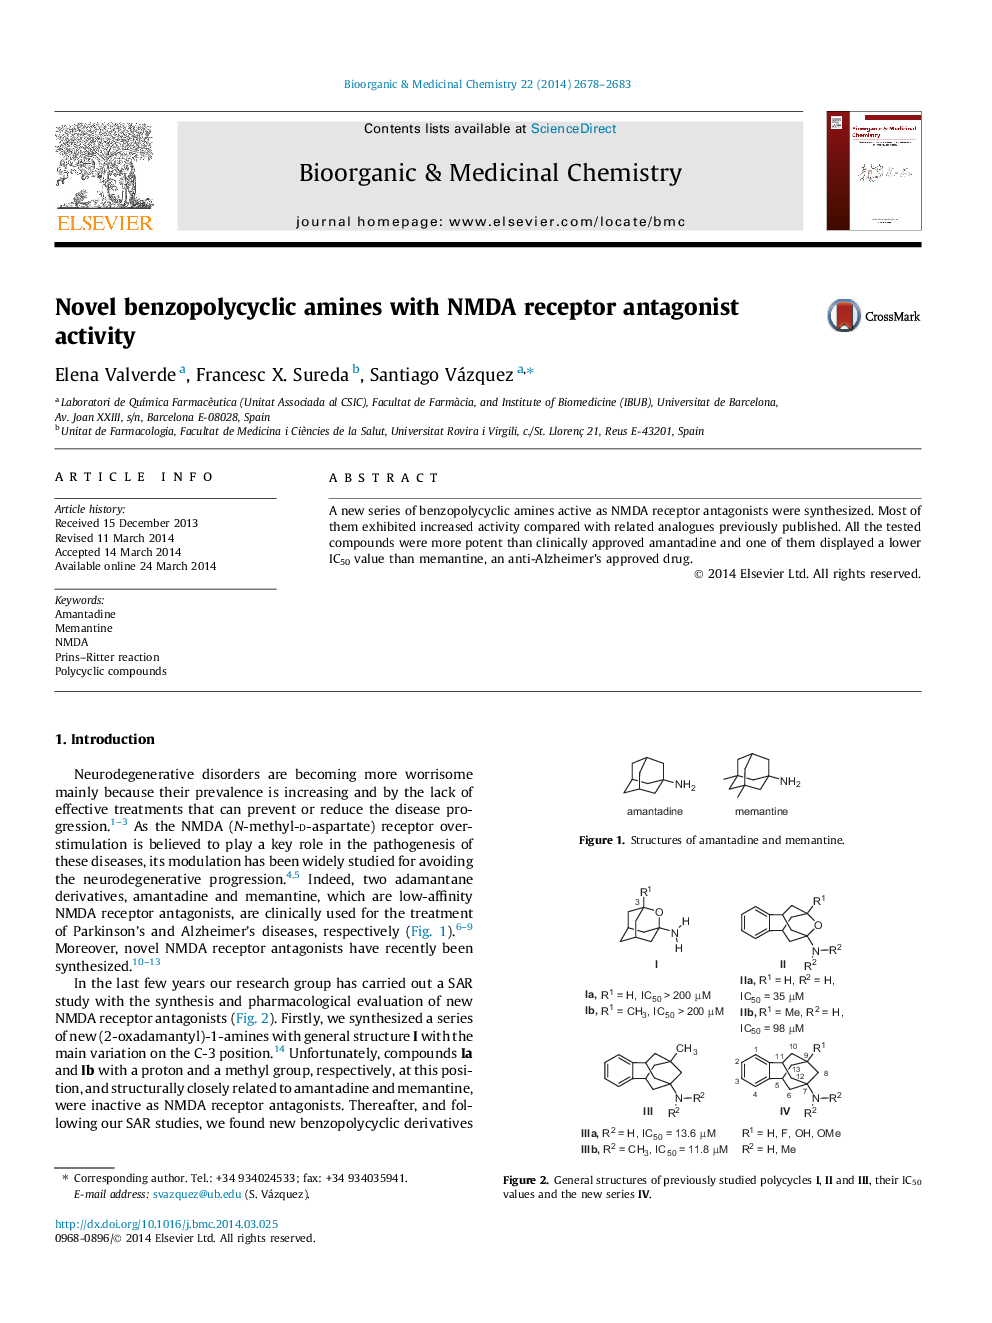 Novel benzopolycyclic amines with NMDA receptor antagonist activity